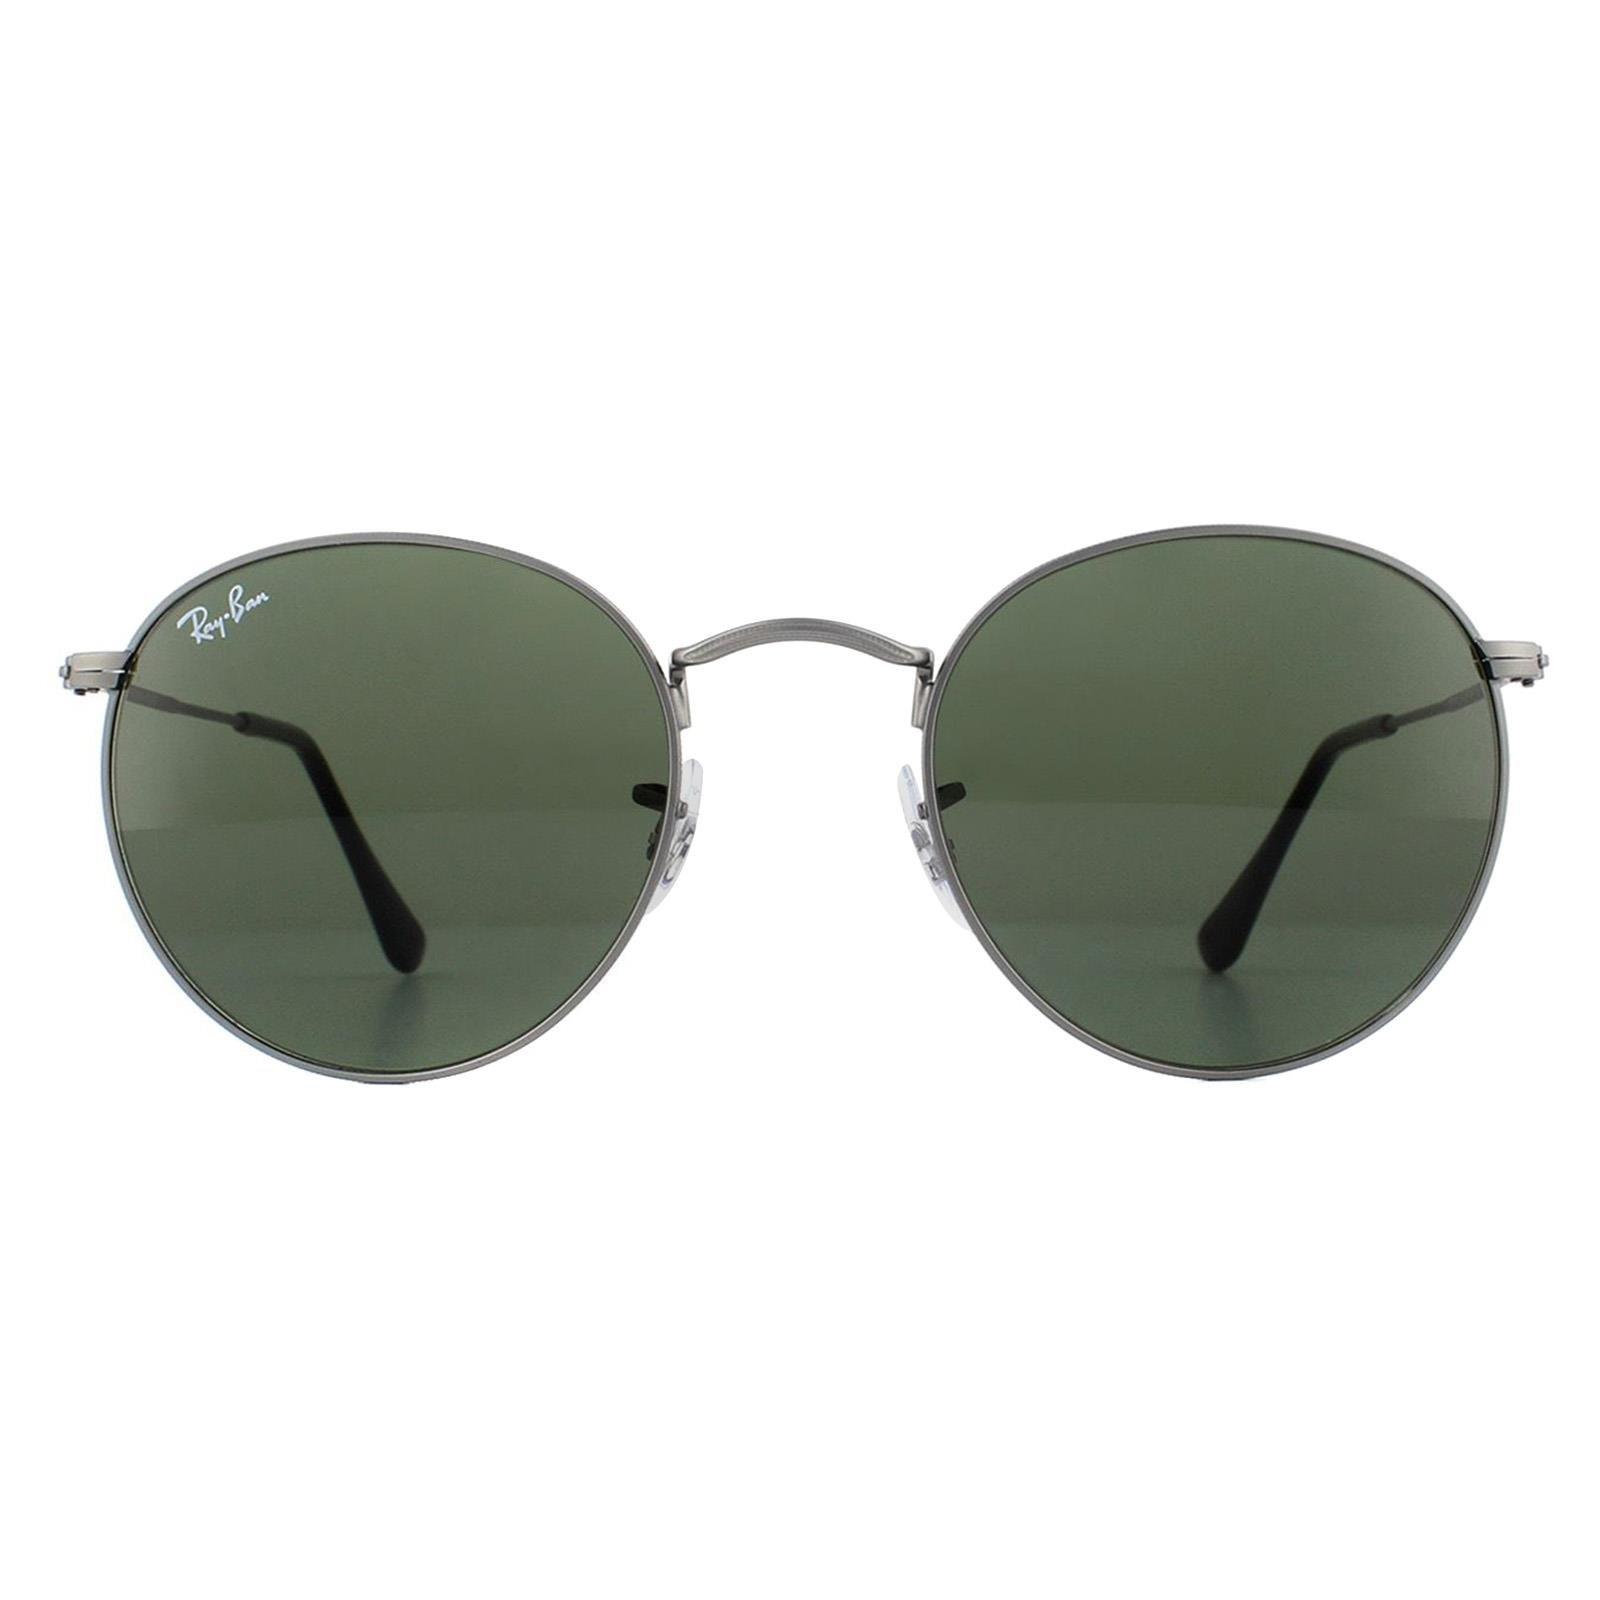 цена Круглые матовые зеленые солнцезащитные очки цвета бронзы Ray-Ban, серый